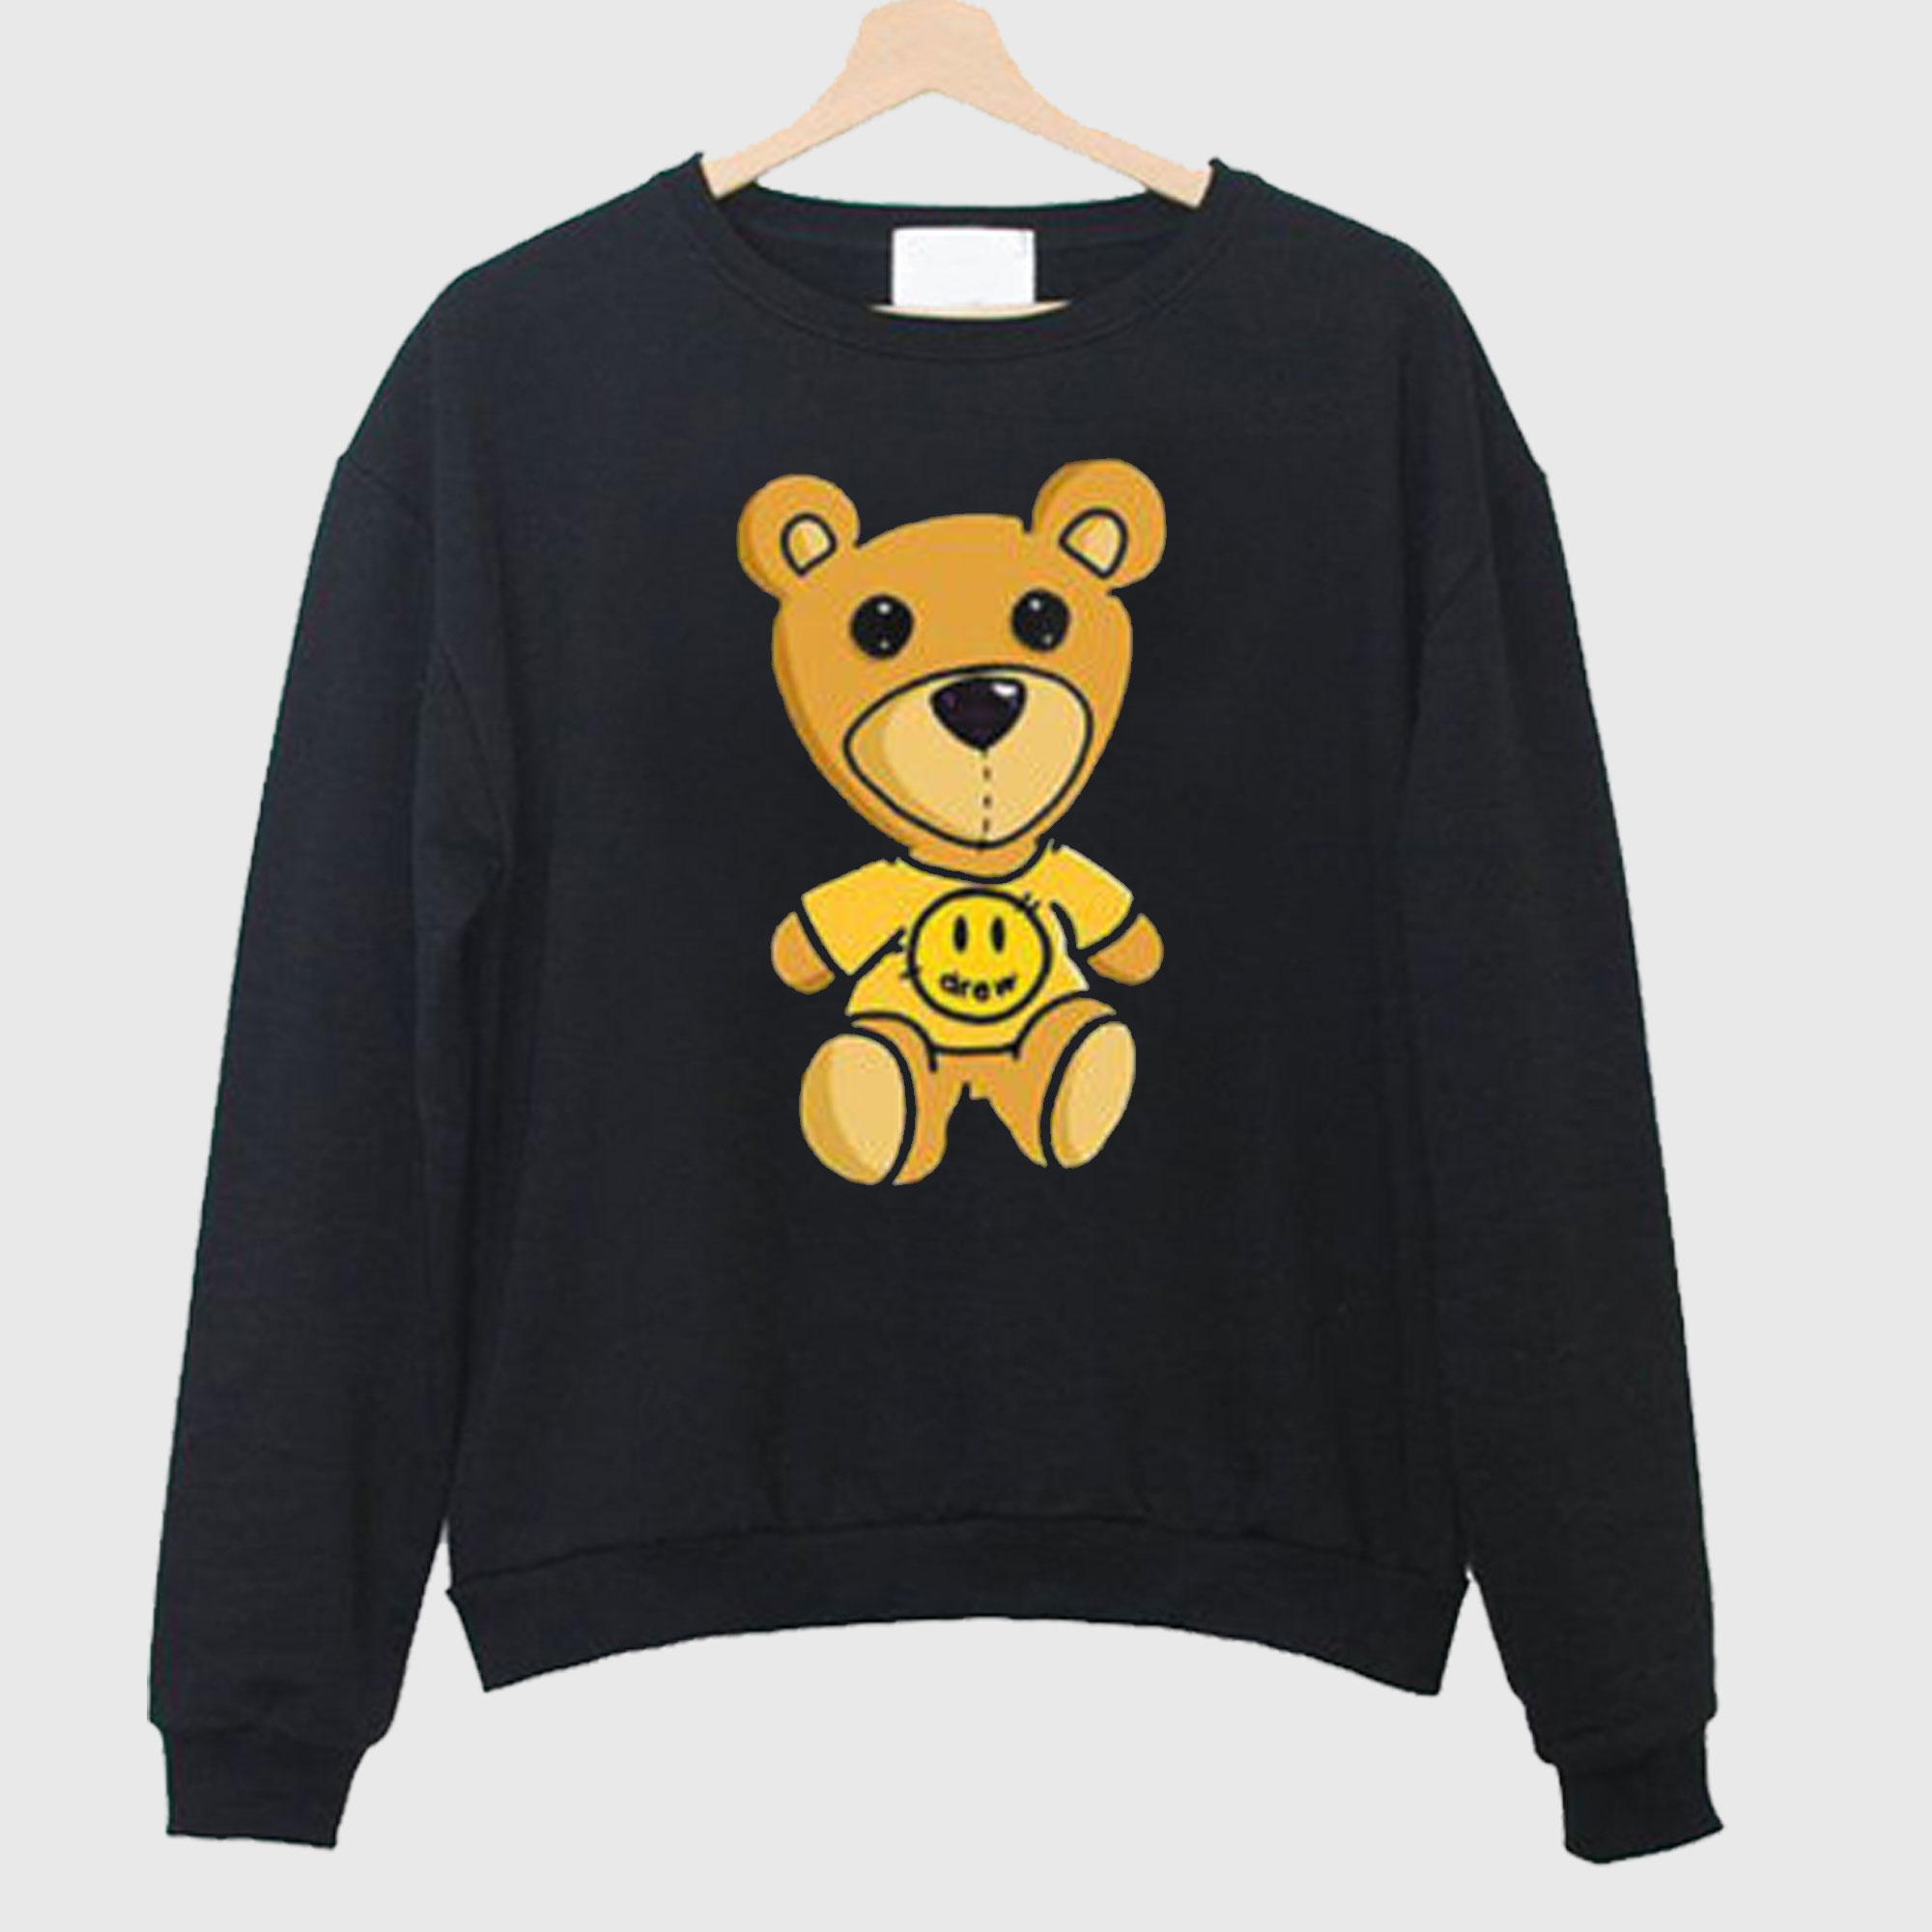 amazing good quality drew house teddy bear sweatshirt